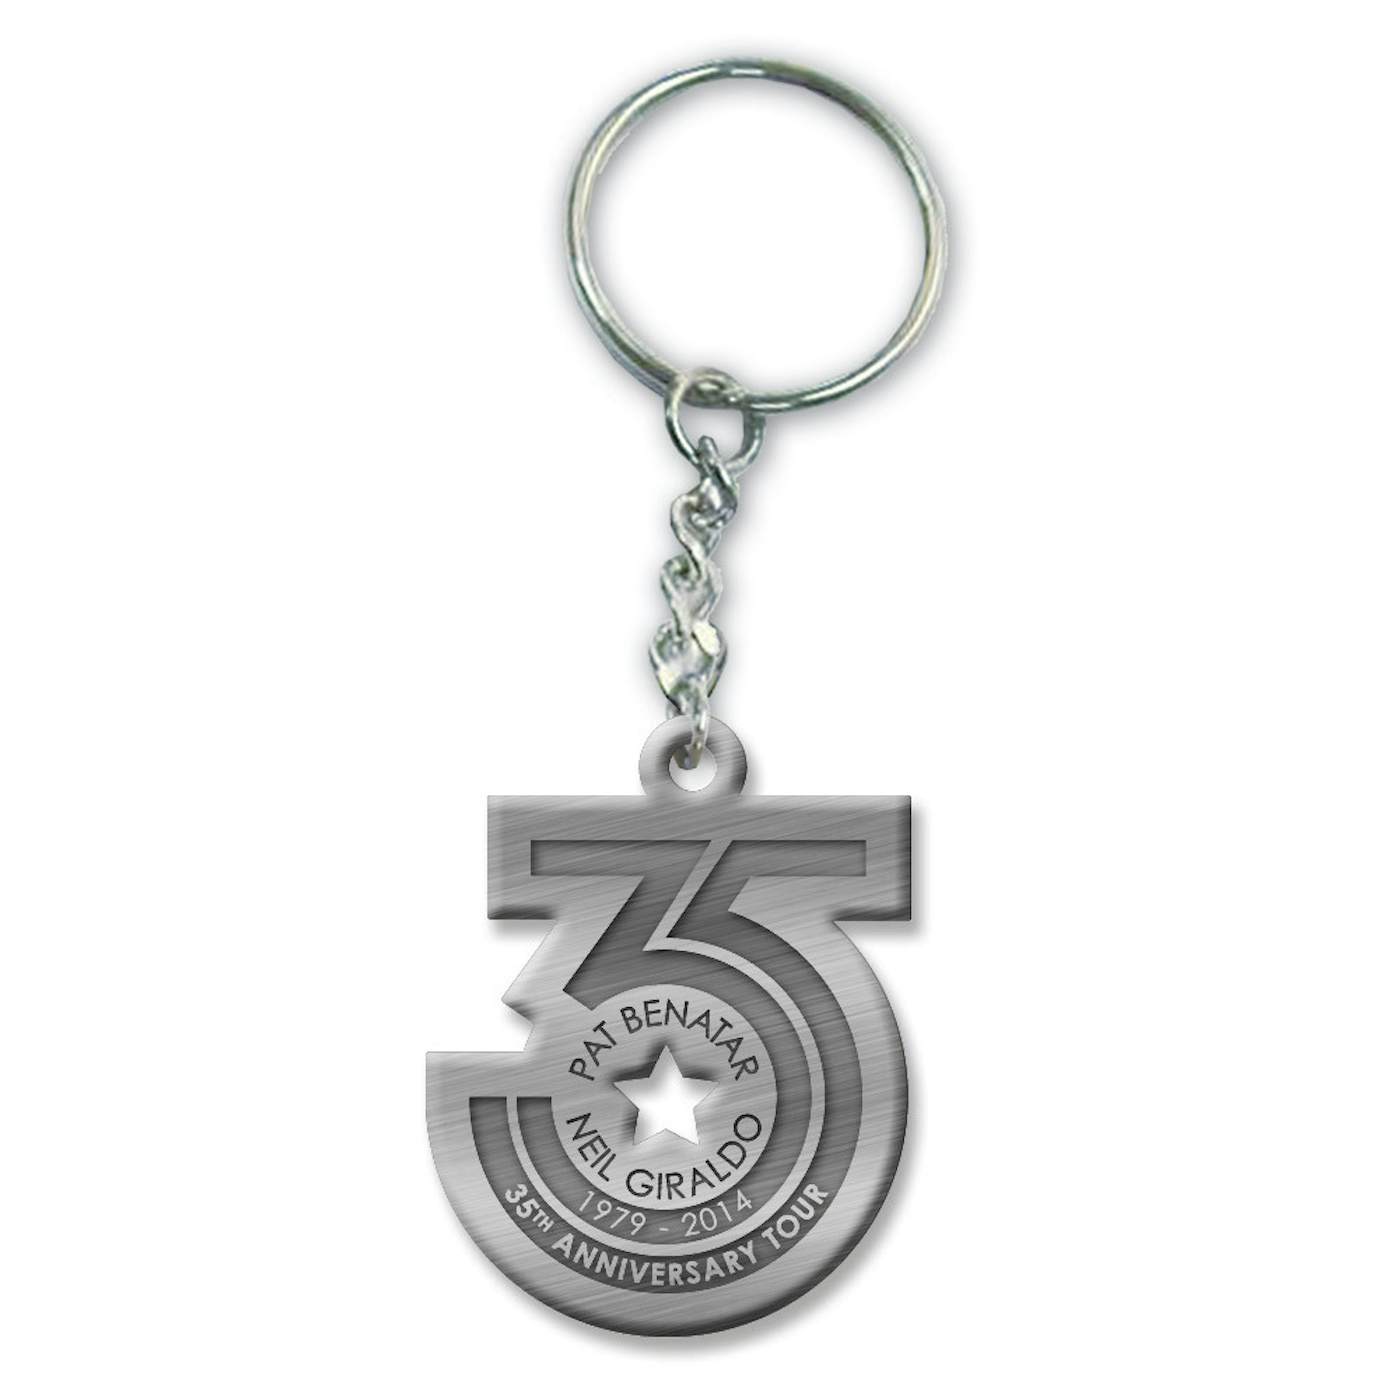 Pat Benatar 35th Anniverary Tour Keychain